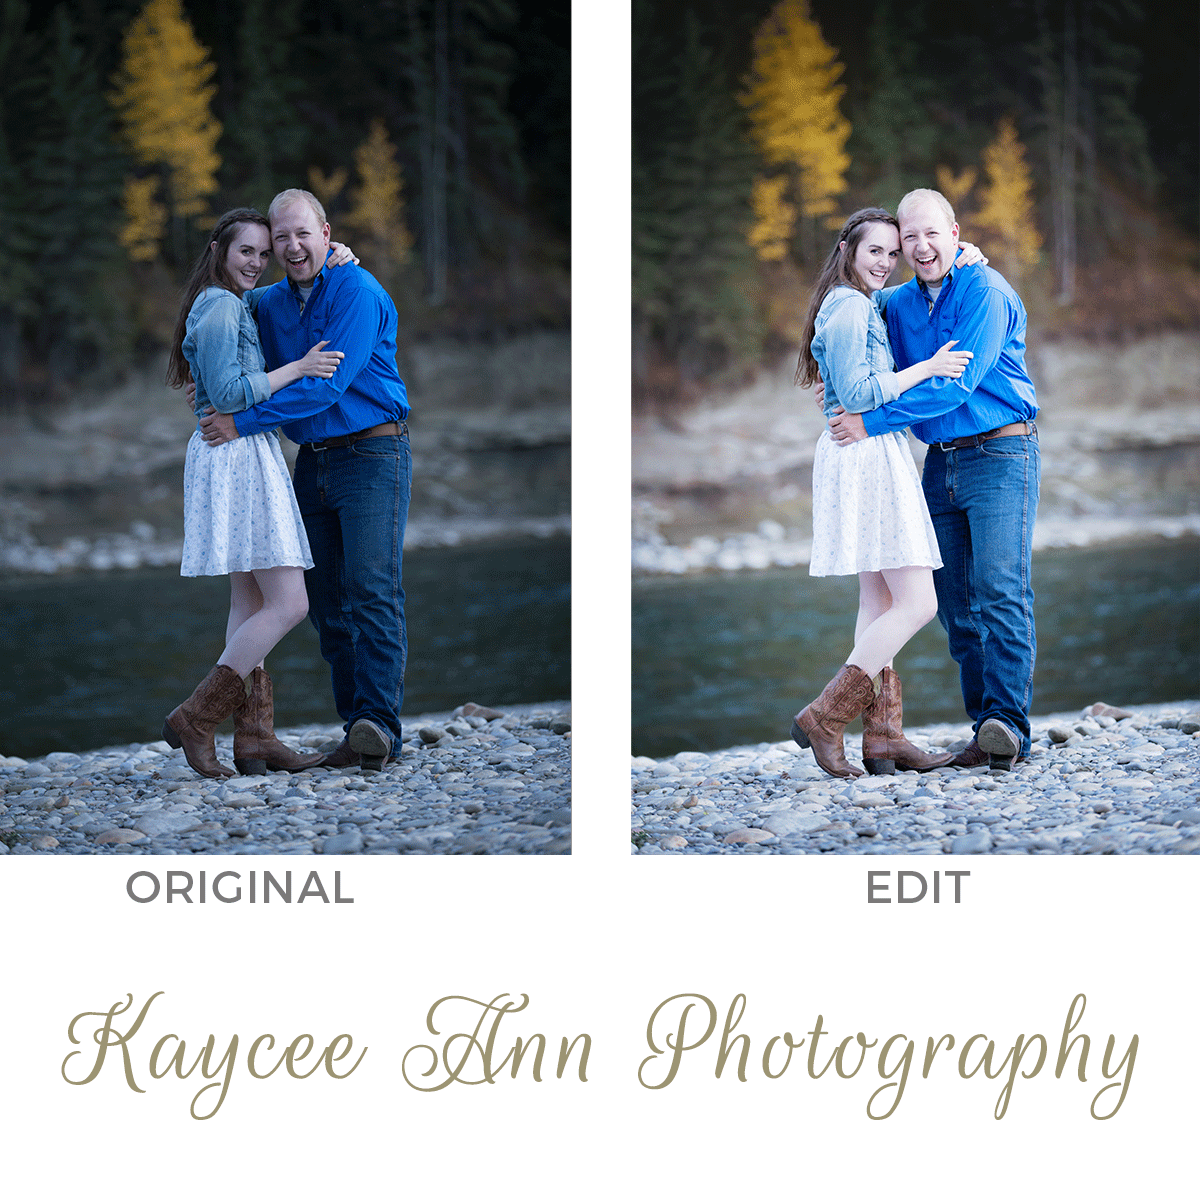 Photoshop magic by Kaycee Ann Photography, Airdrie Alberta